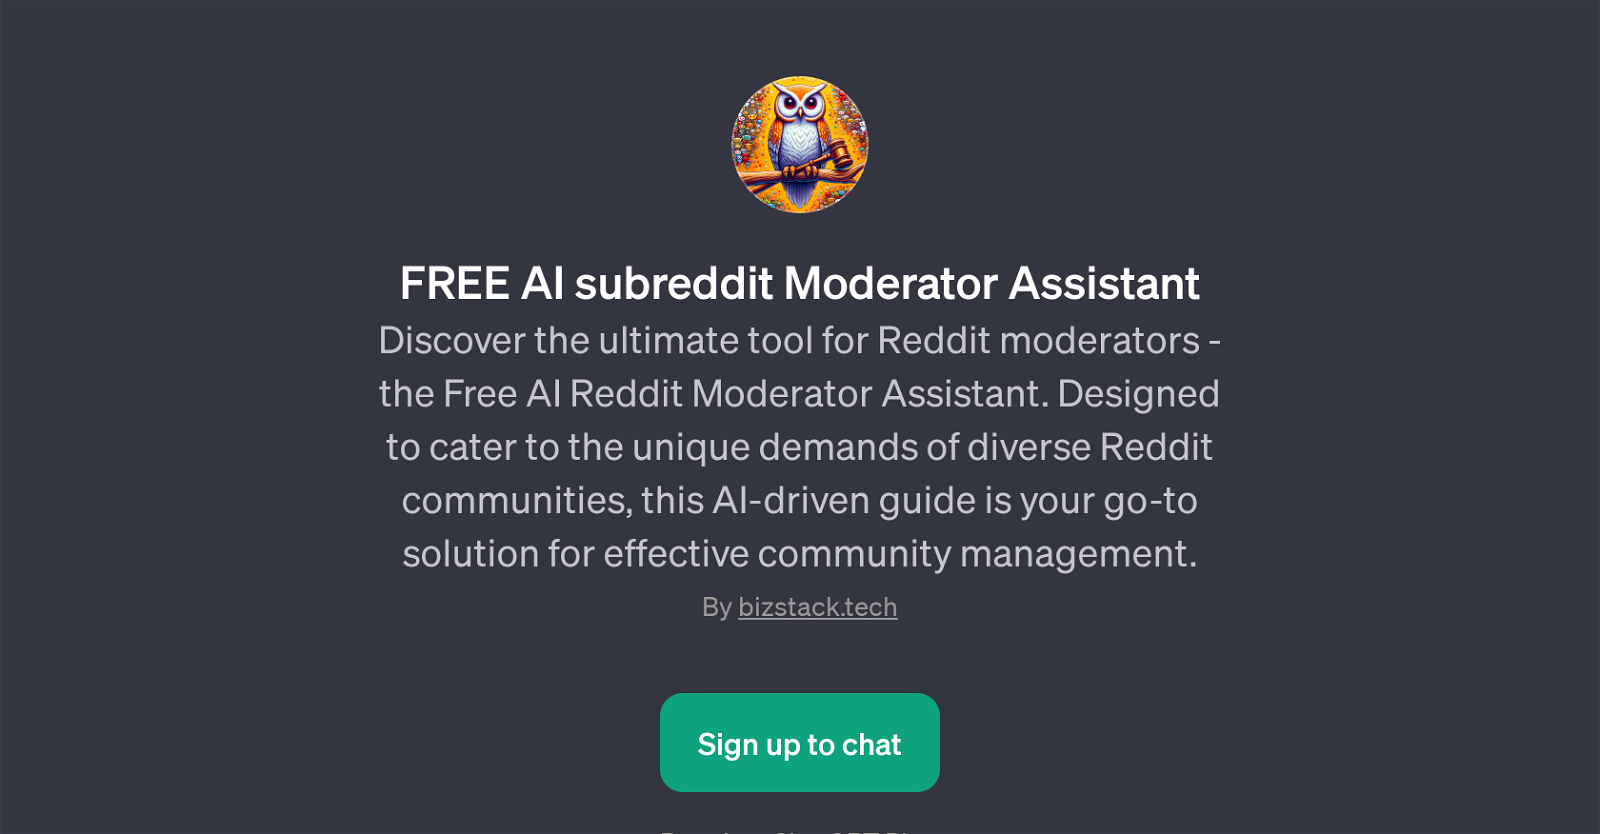 Free AI subreddit Moderator Assistant website